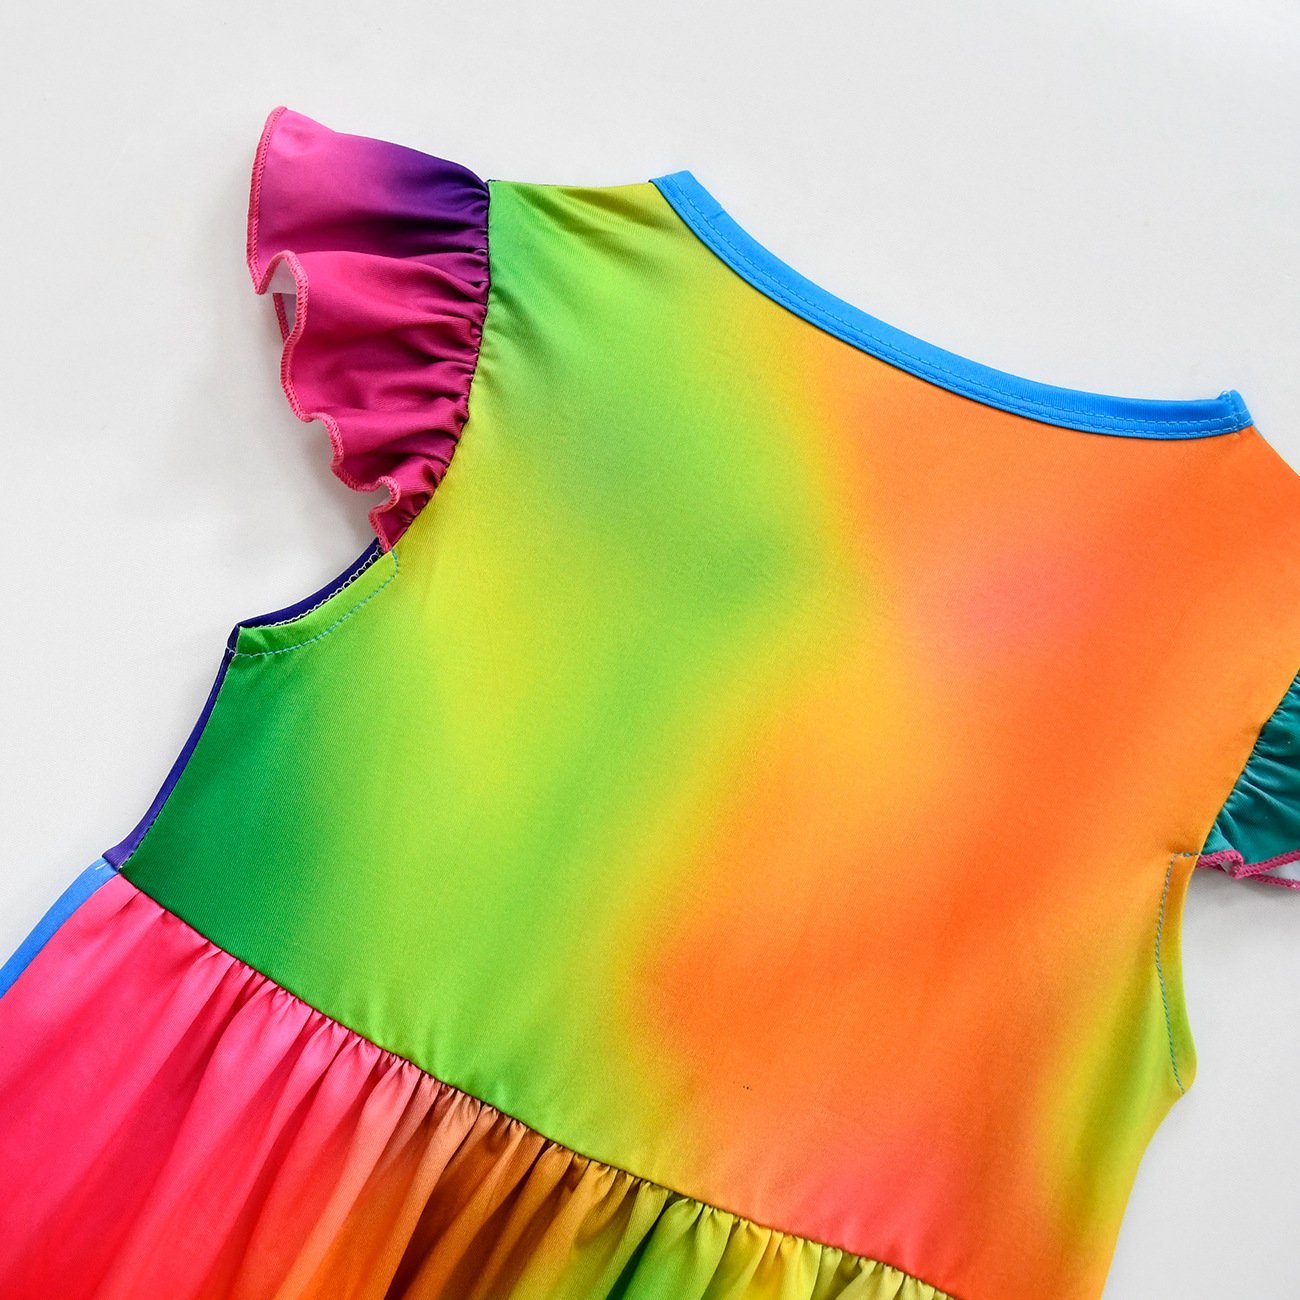 Roblox rainbow friends Costume Cosplay rainbow Monster flying sleeves Dress